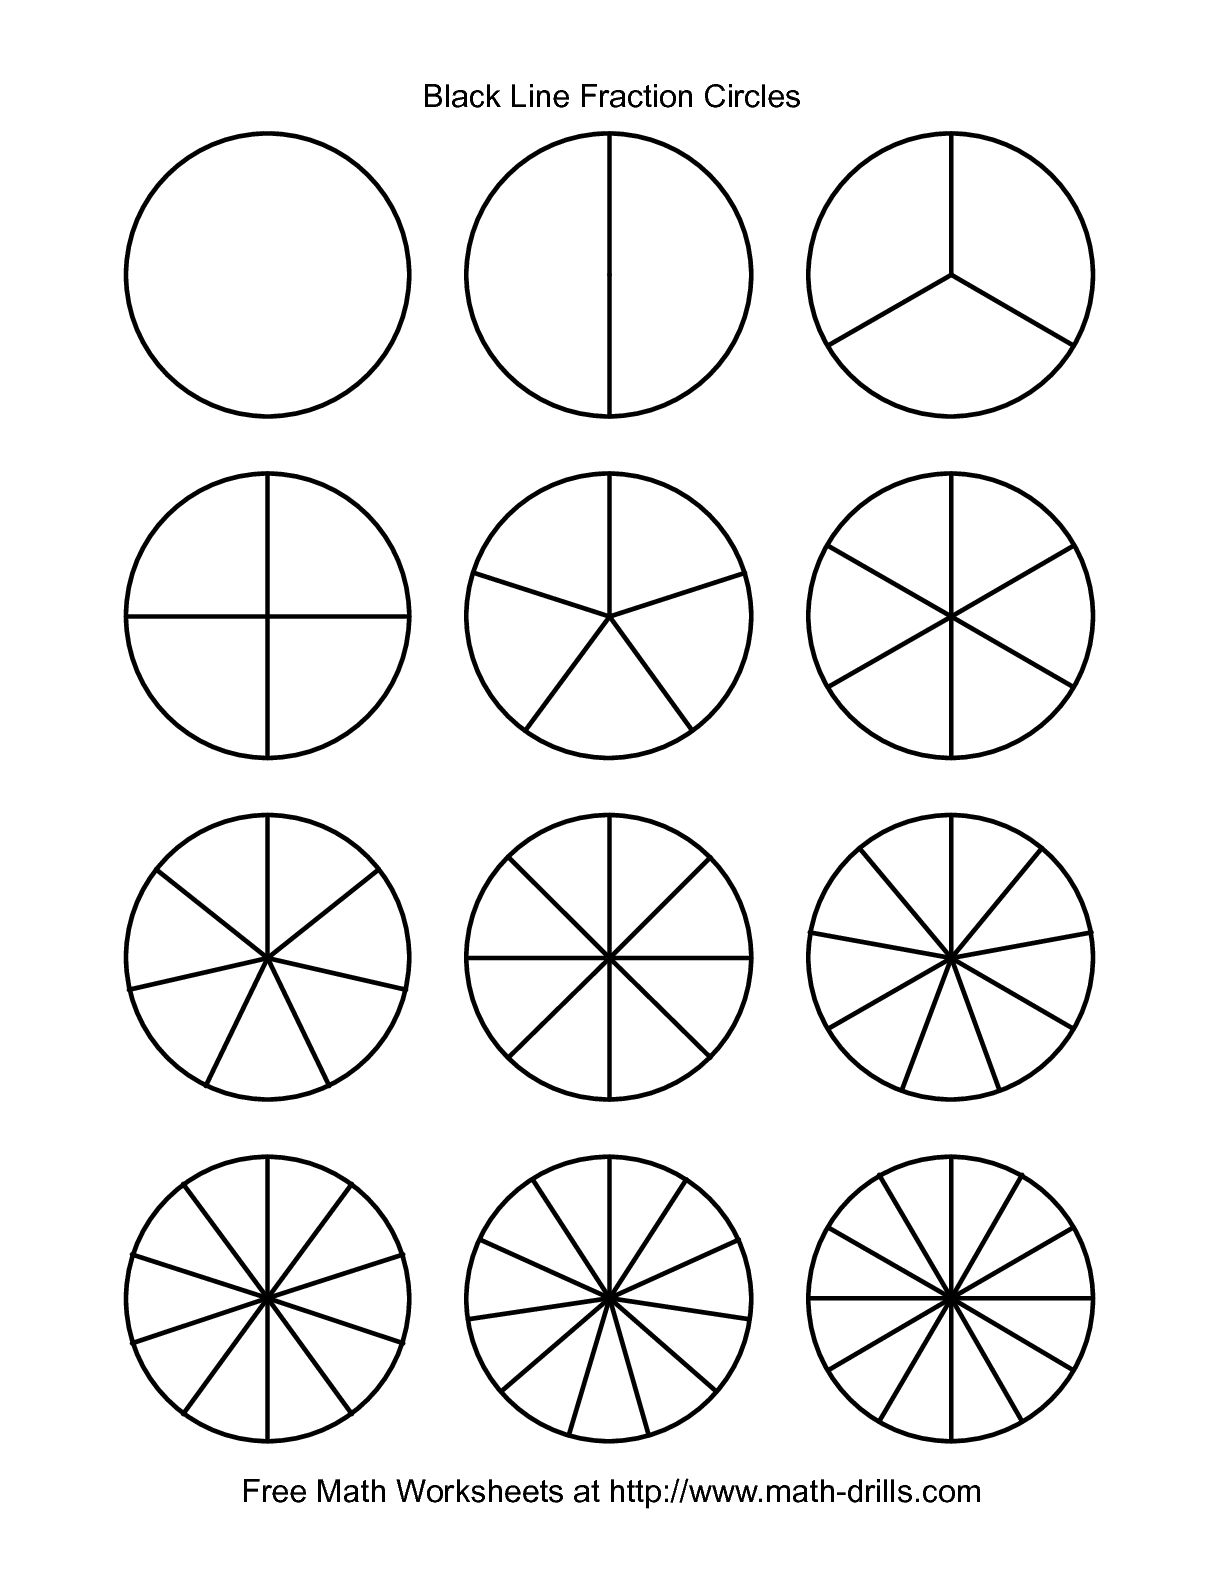 Blank Fraction Circles Worksheets Image